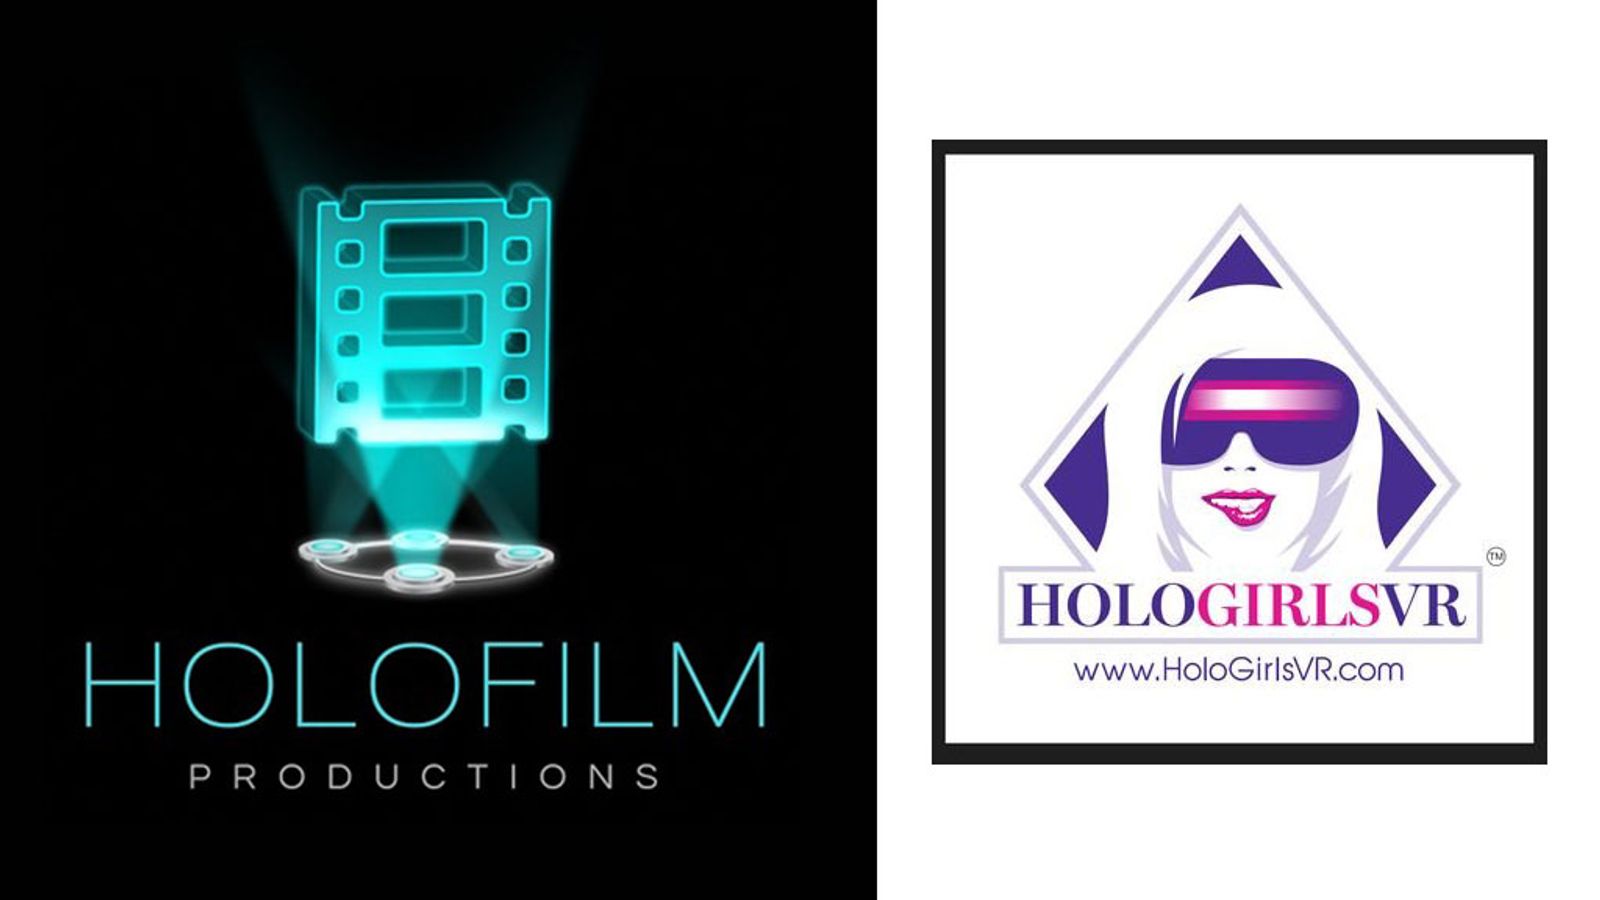 HoloFilm Productions Reduces Pricing For VR Porn Site HoloGirlsVR.com 